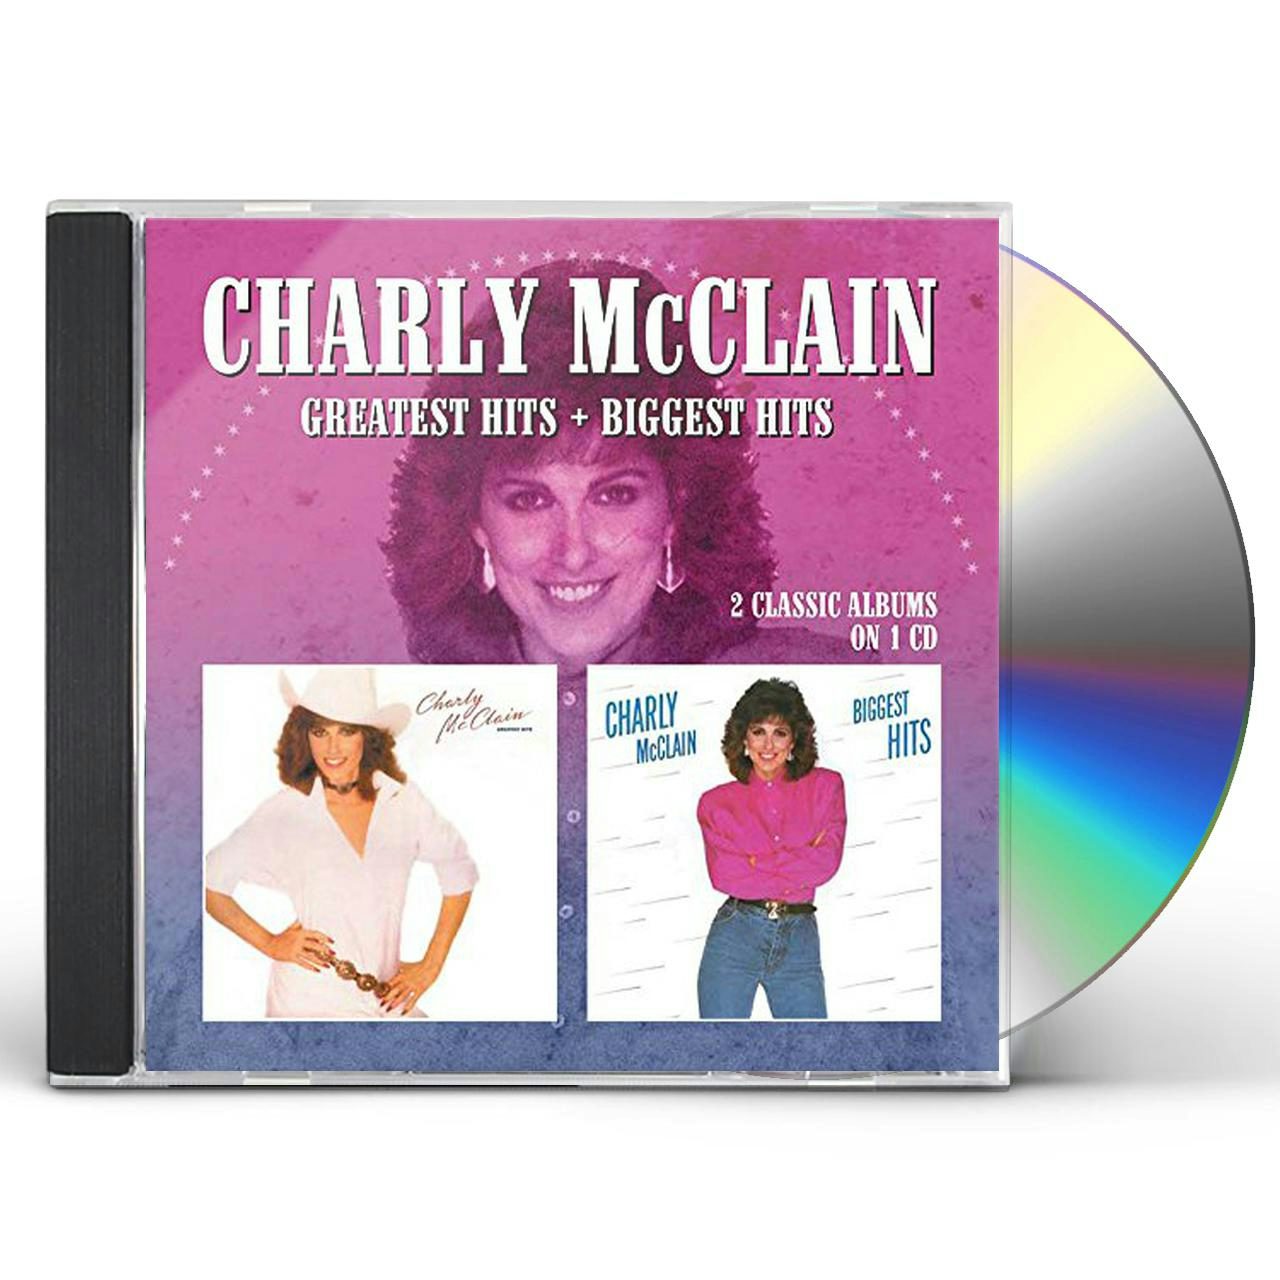 charly mcclain cd